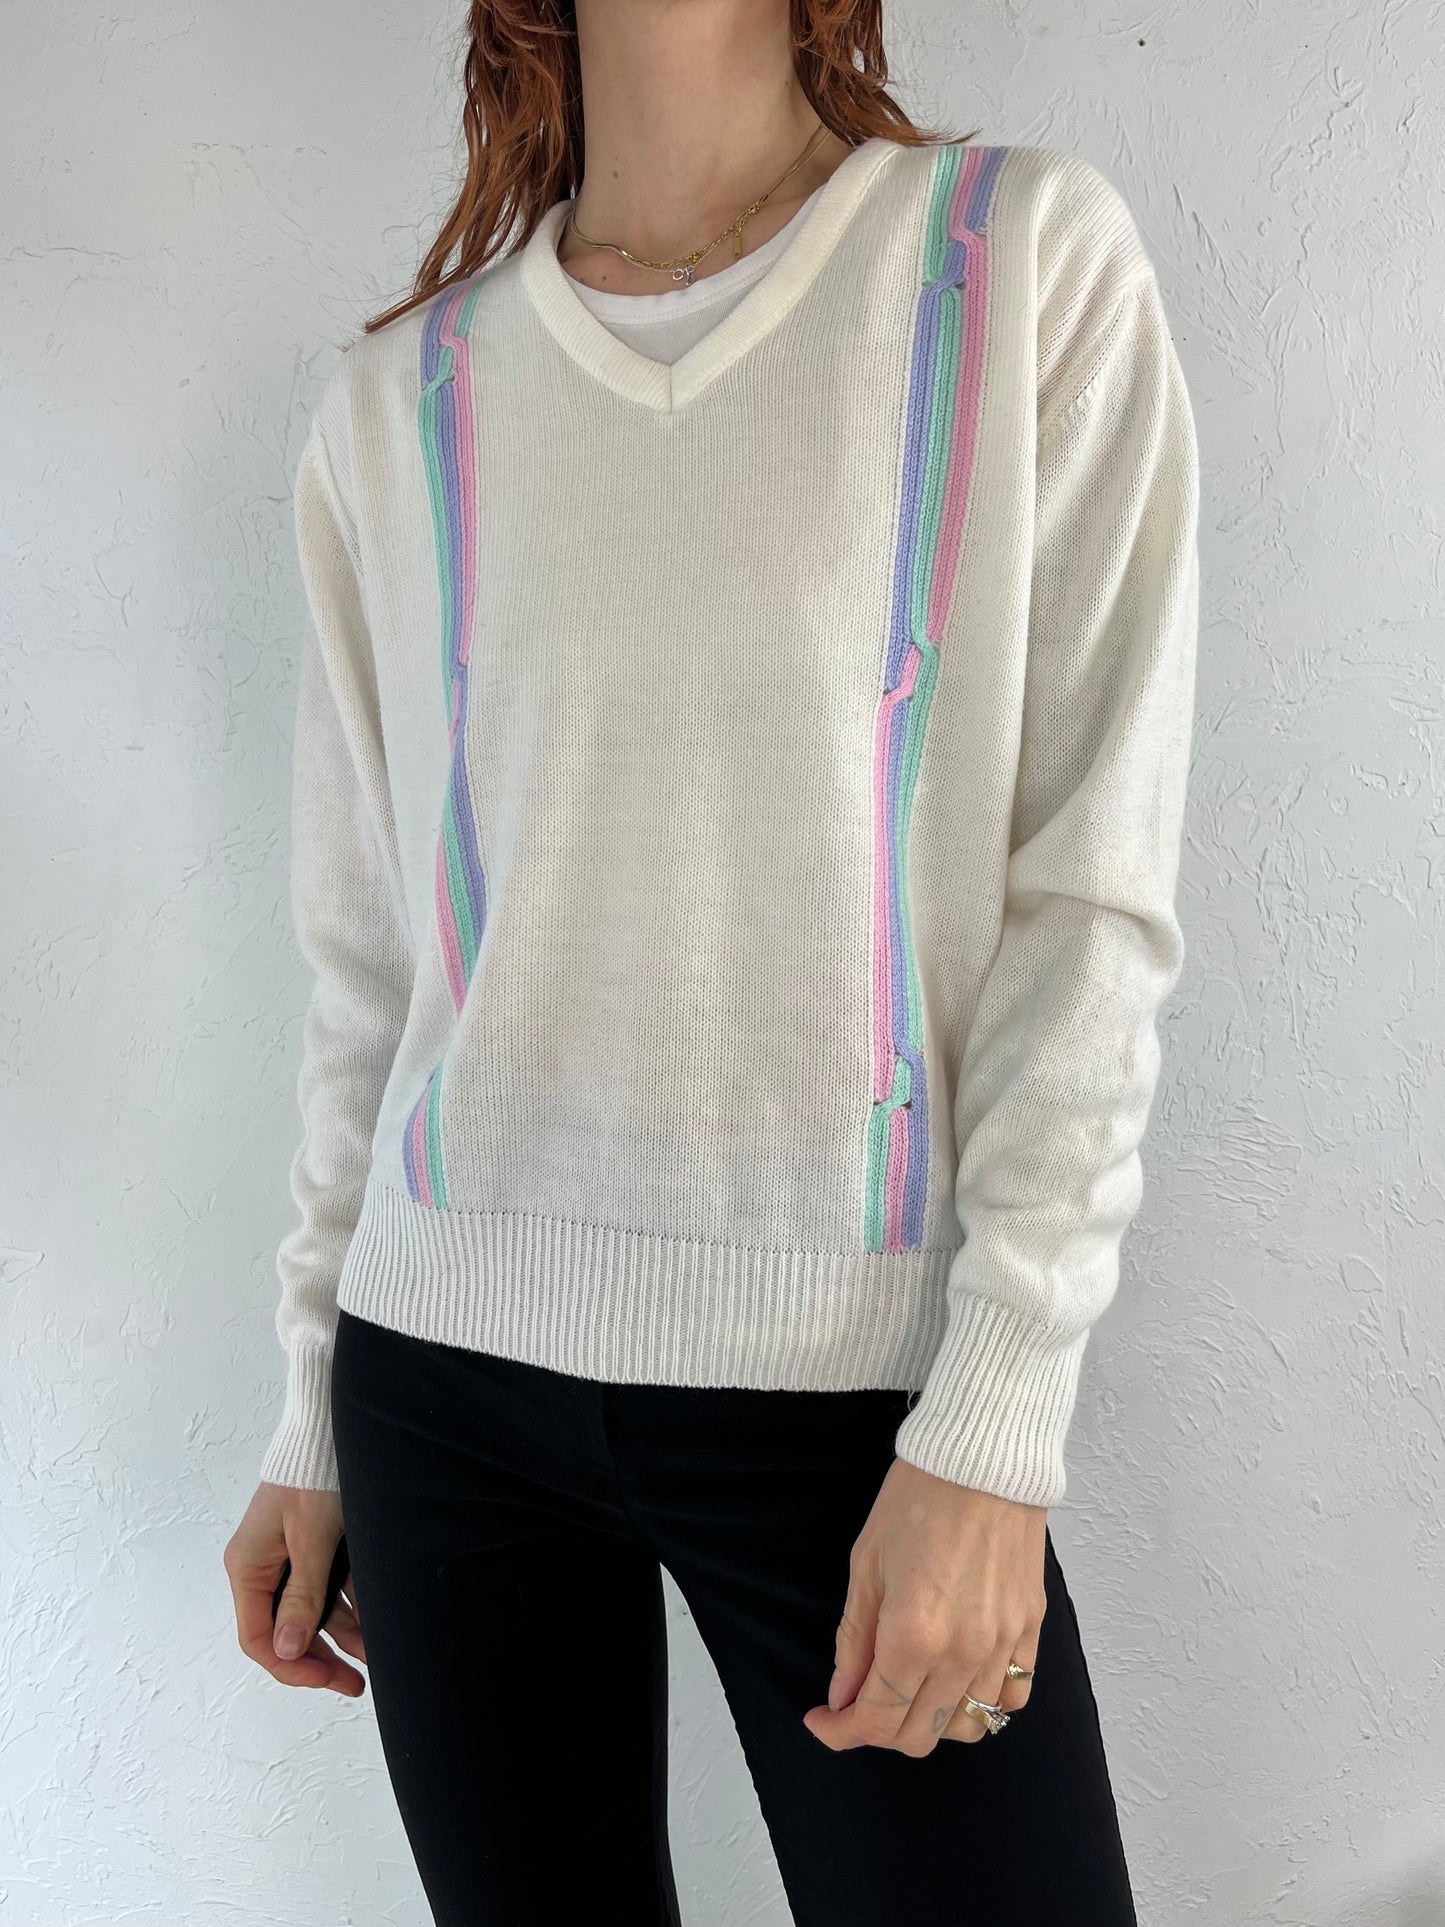 90s 'Slazenger' Acrylic Knit V Neck Sweater / Medium